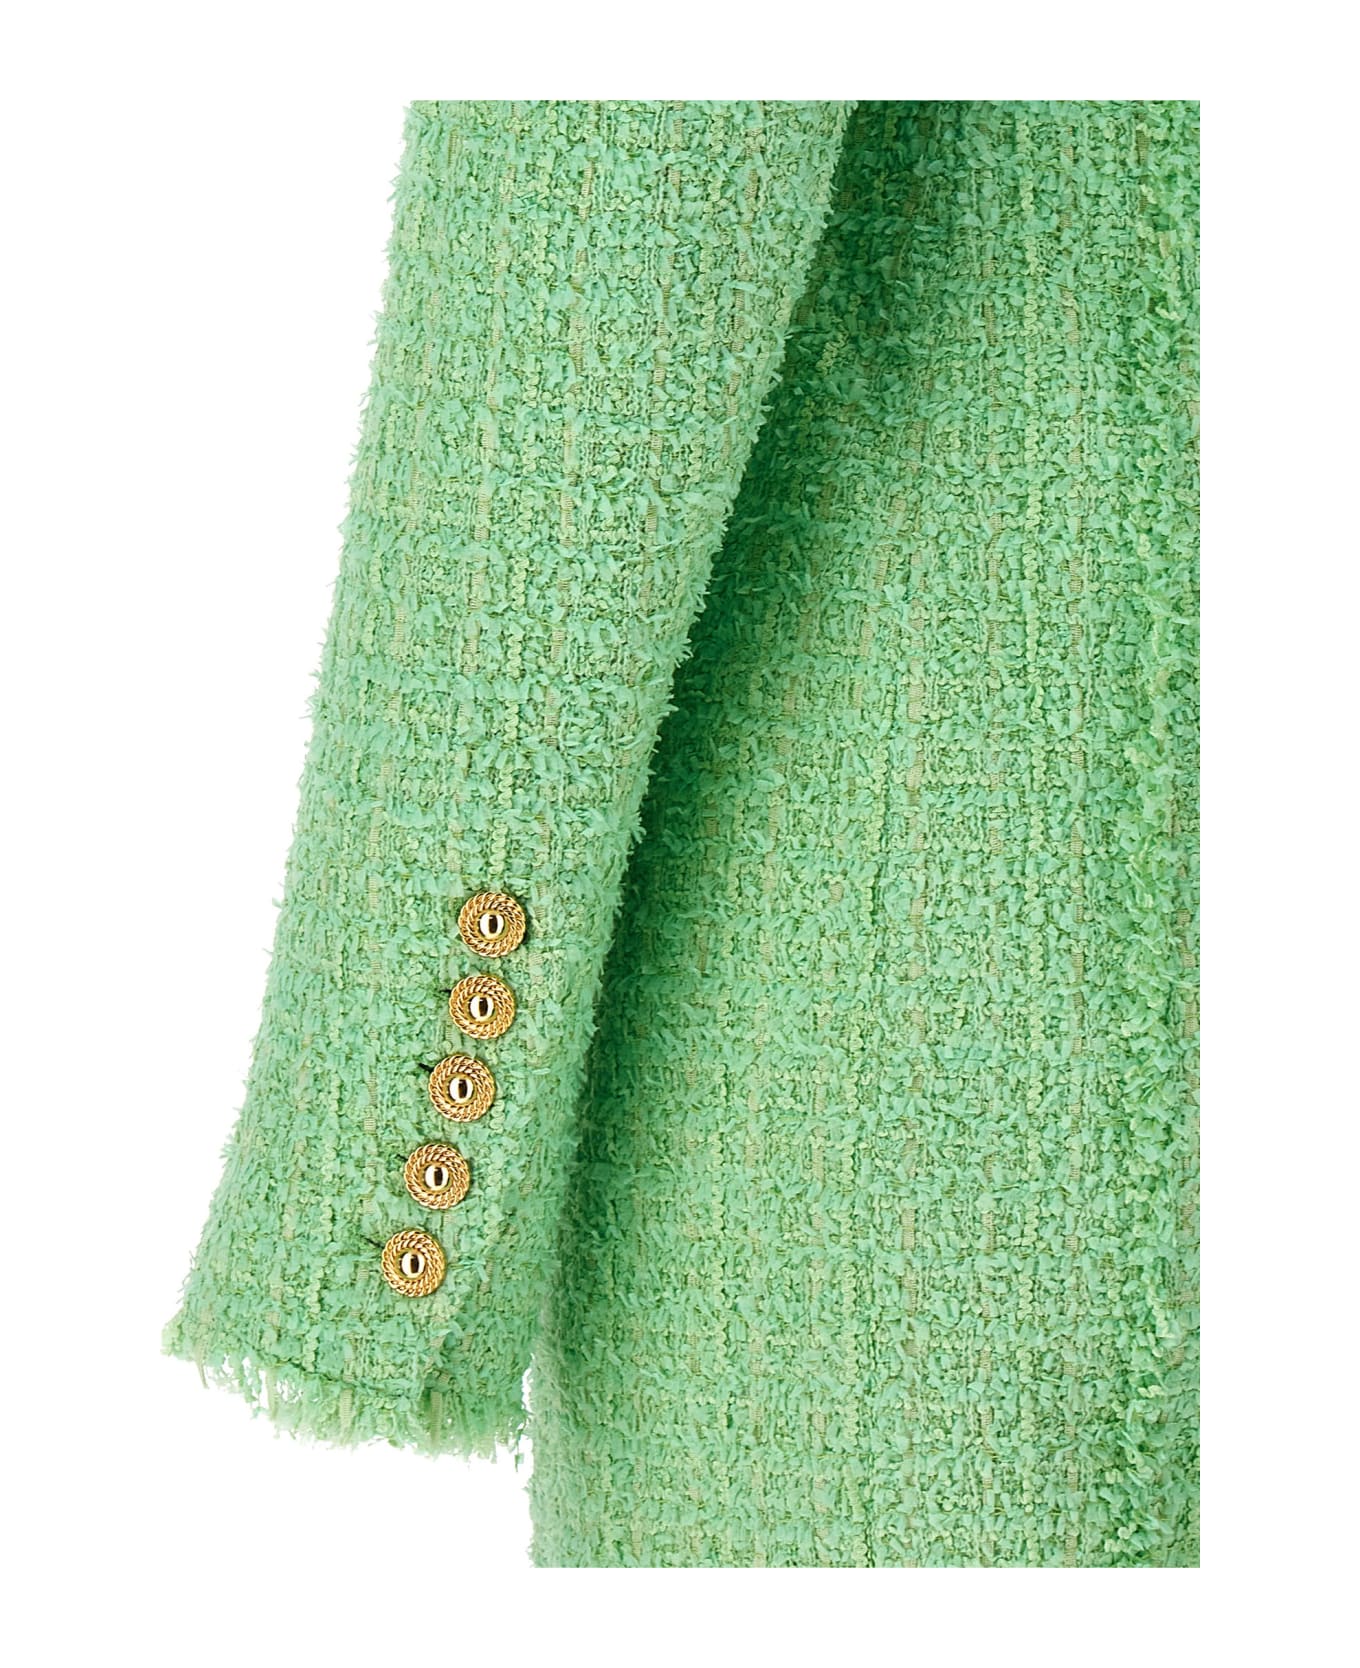 Balmain top Tweed Dress - Green